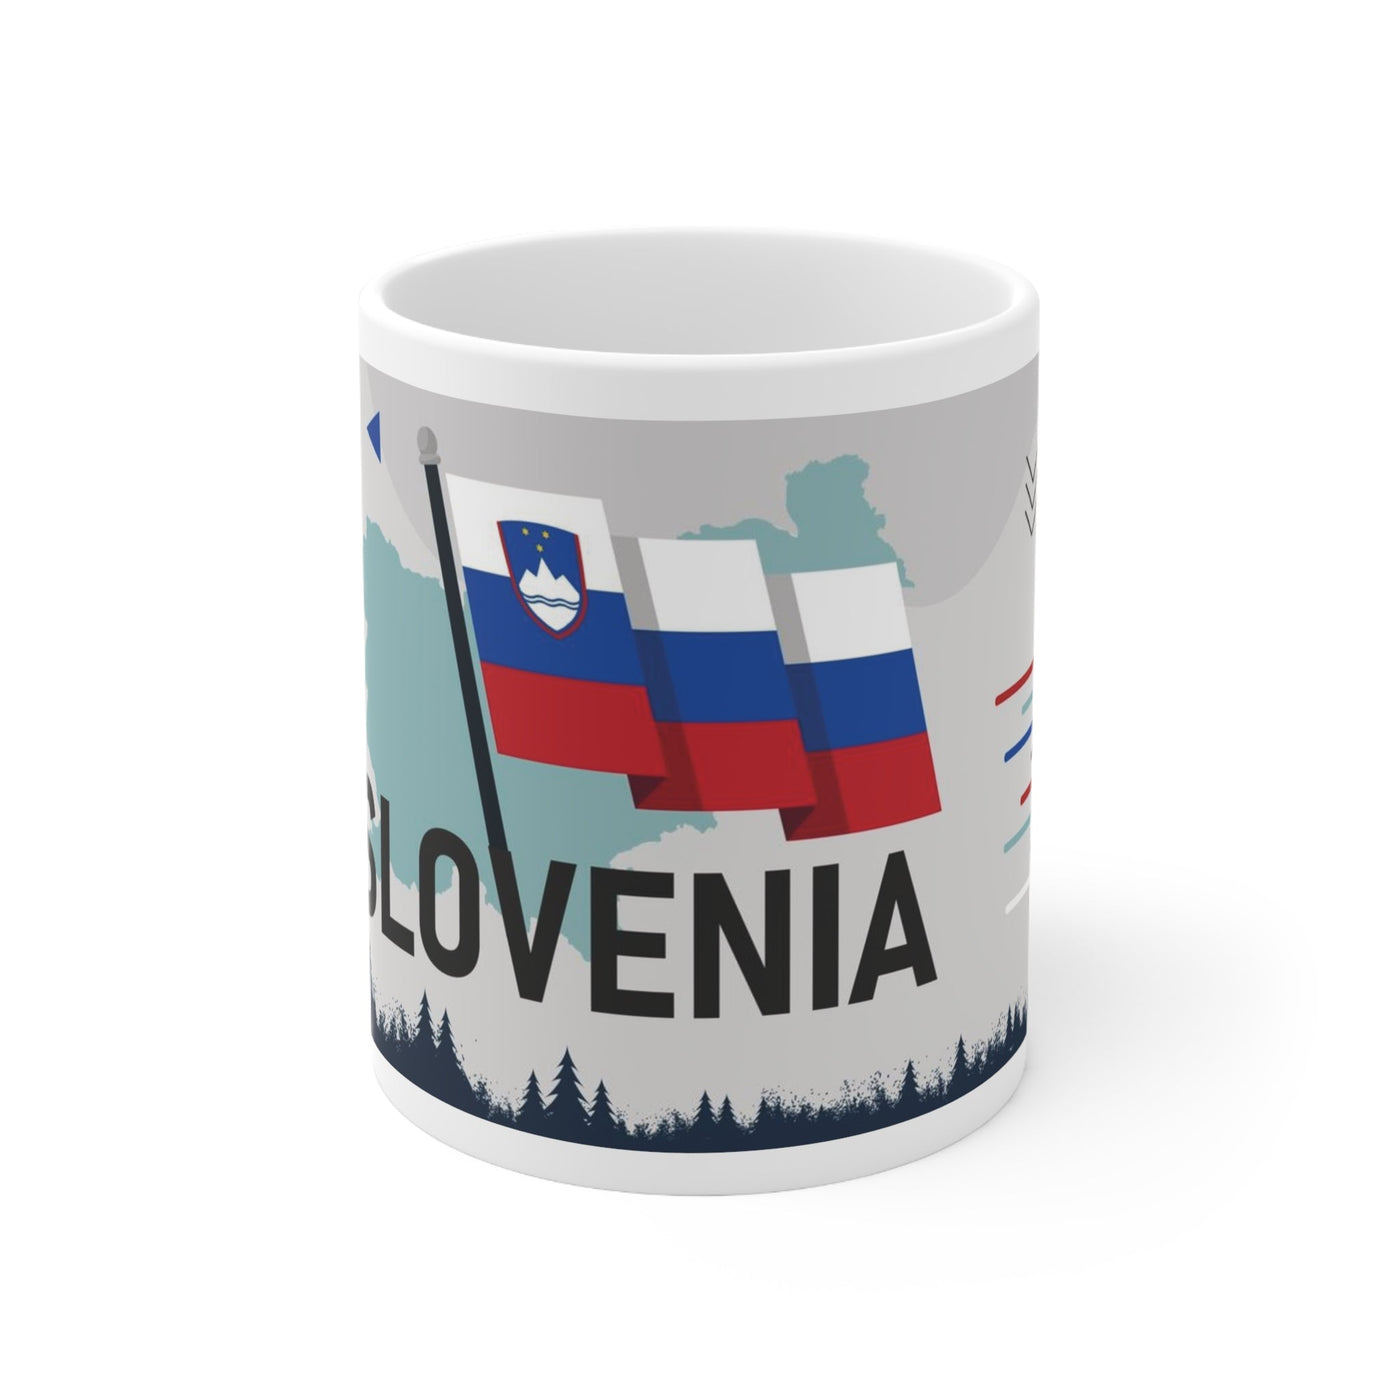 Slovenia Coffee Mug - Ezra's Clothing